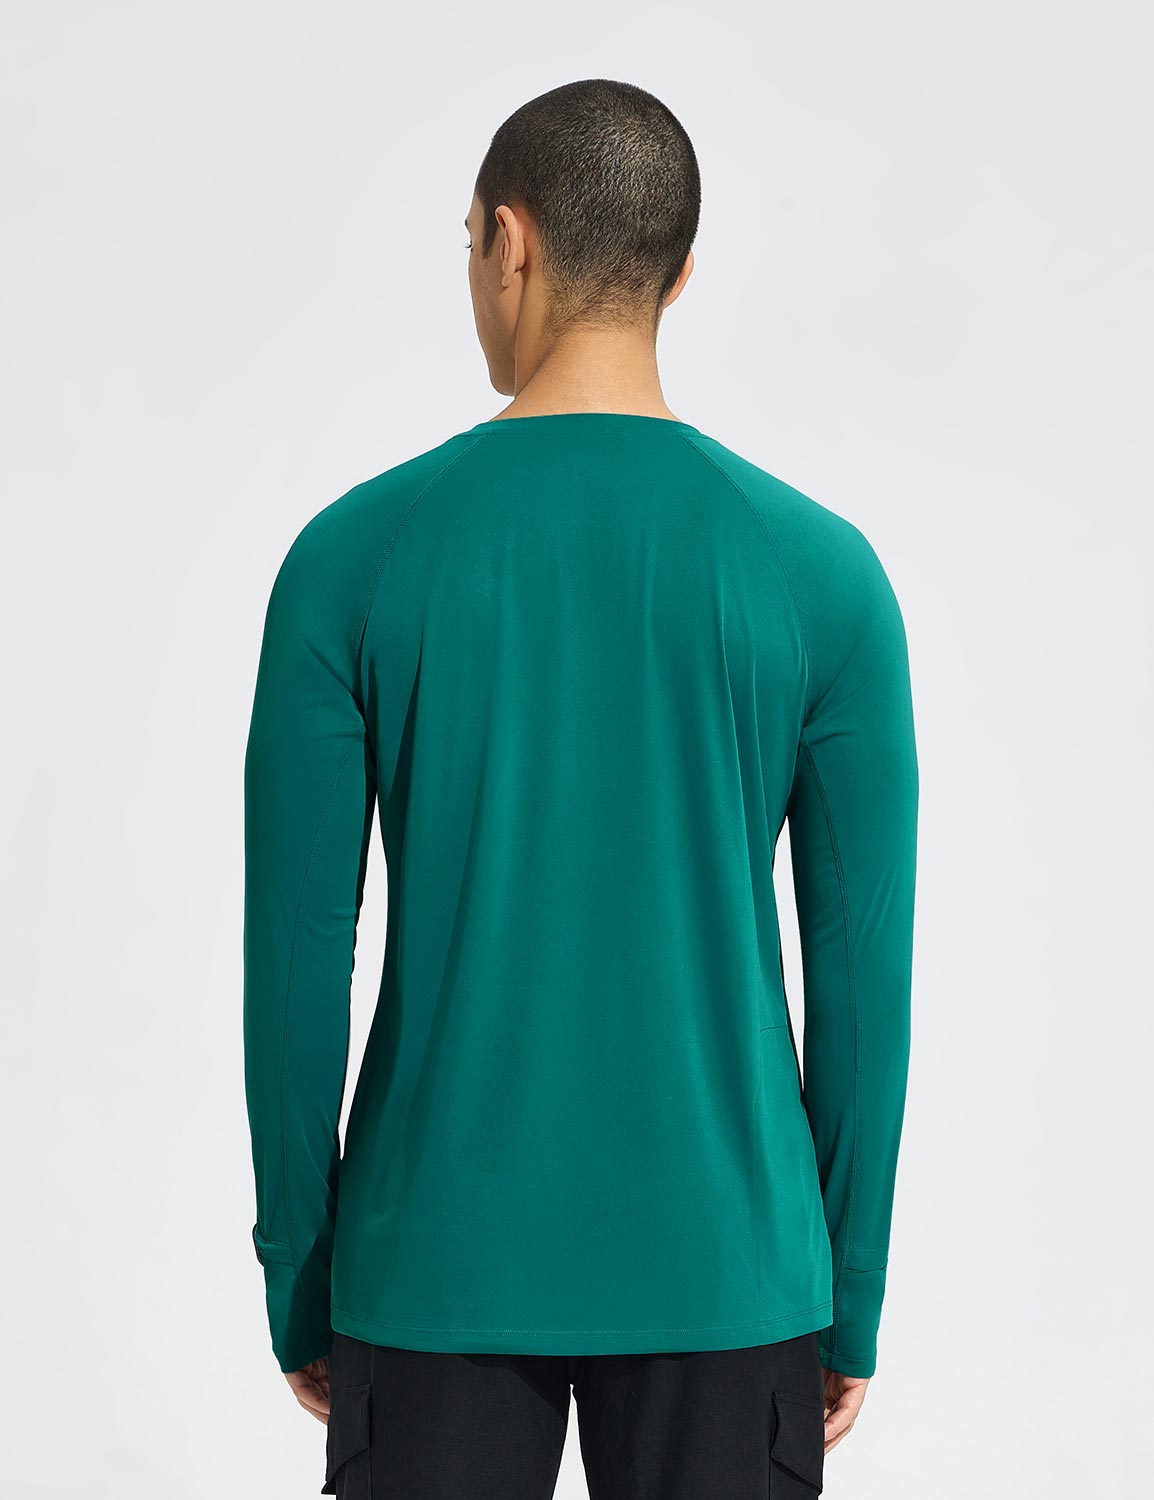 Baleaf Men‘s Quick-dry UPF 50+ Zipper Pocket Shirt Teal Green Back